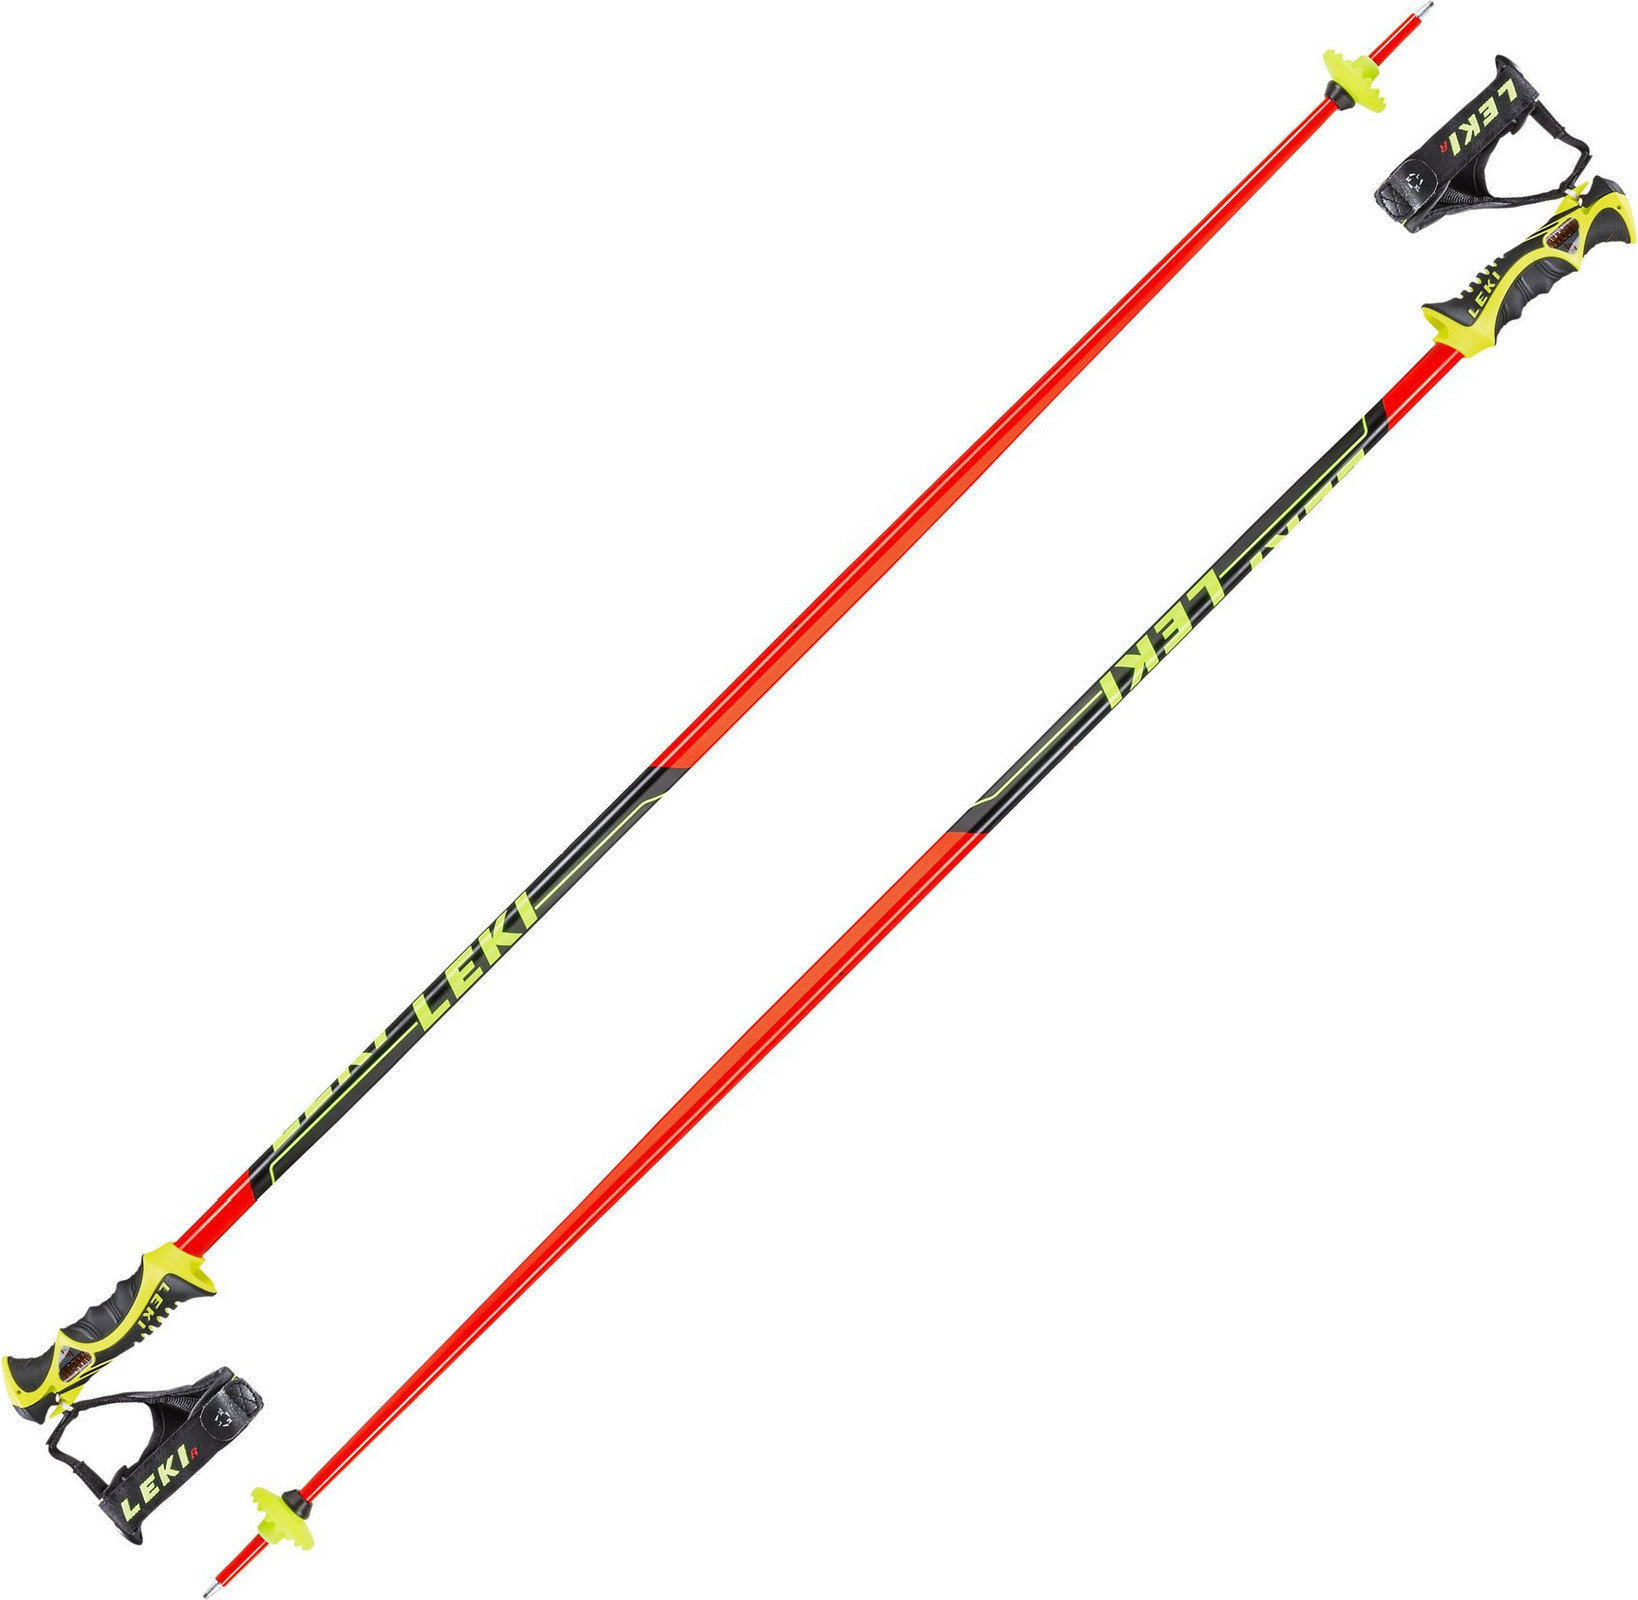 Ski-stokken Leki Worldcup Racing SL Neonred/Black/White/Yellow 130 cm Ski-stokken